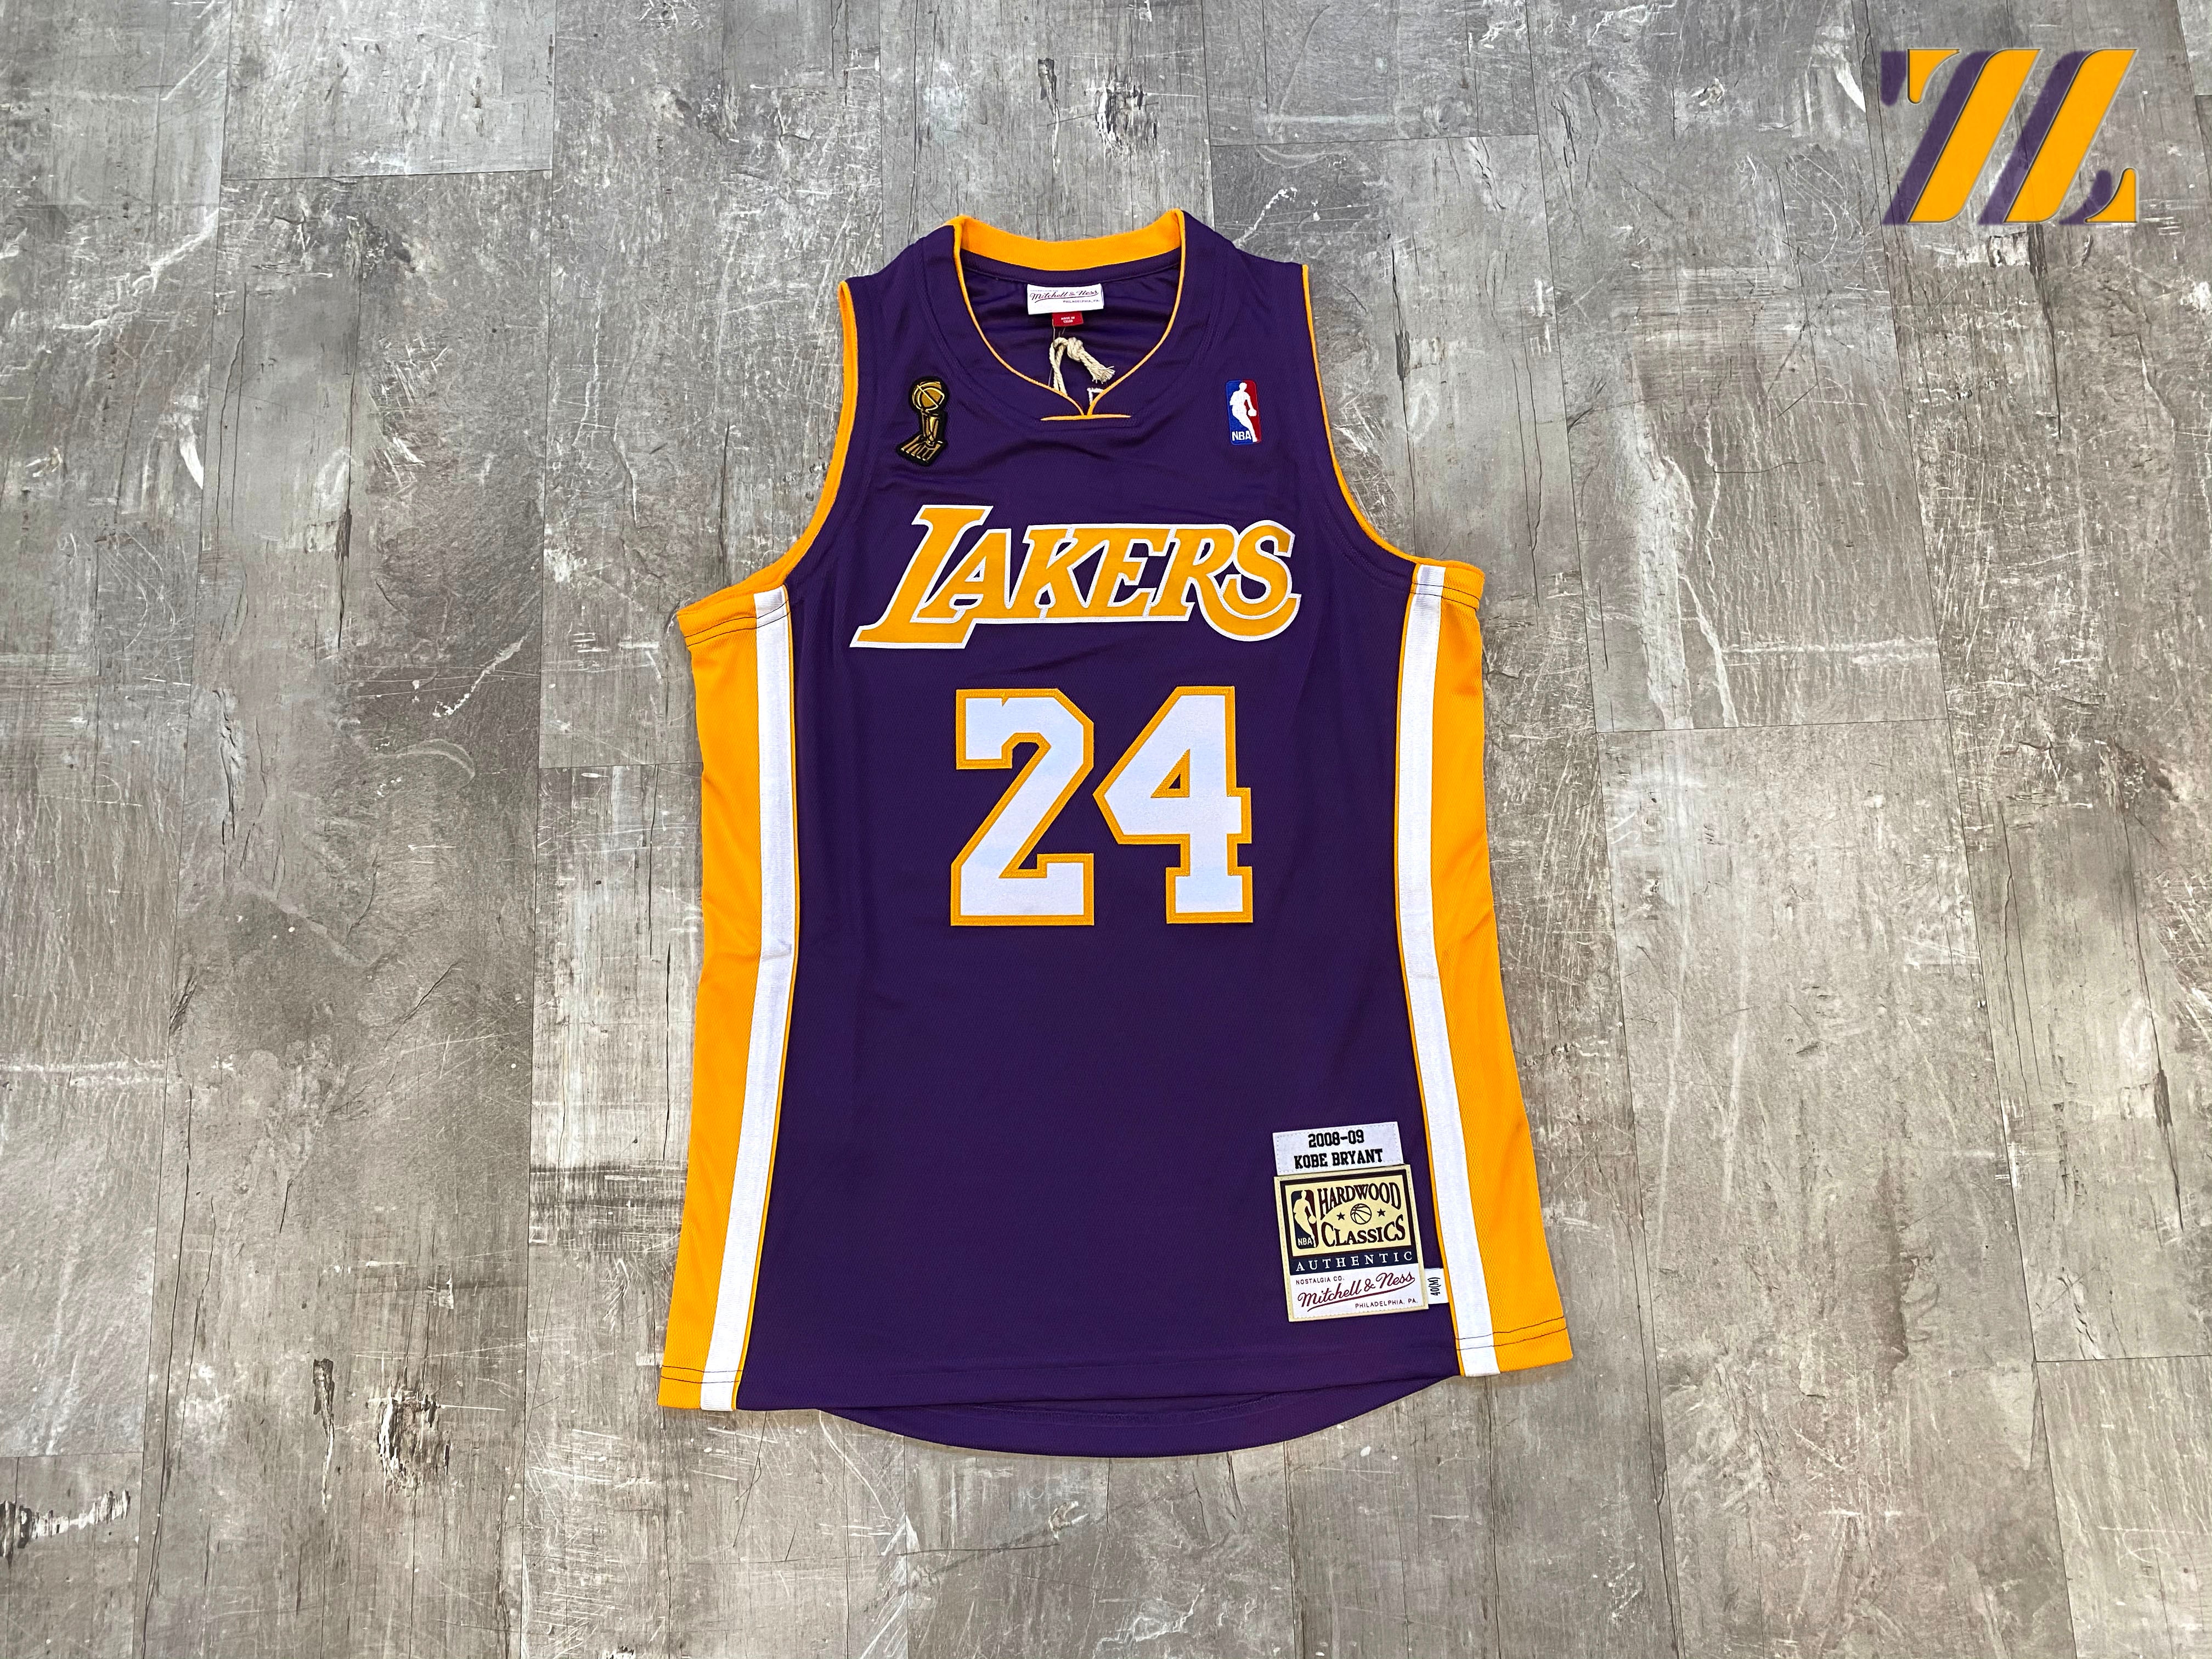 Authentic NBA Adidas Kobe Bryant Lakers Jersey, Men's Fashion